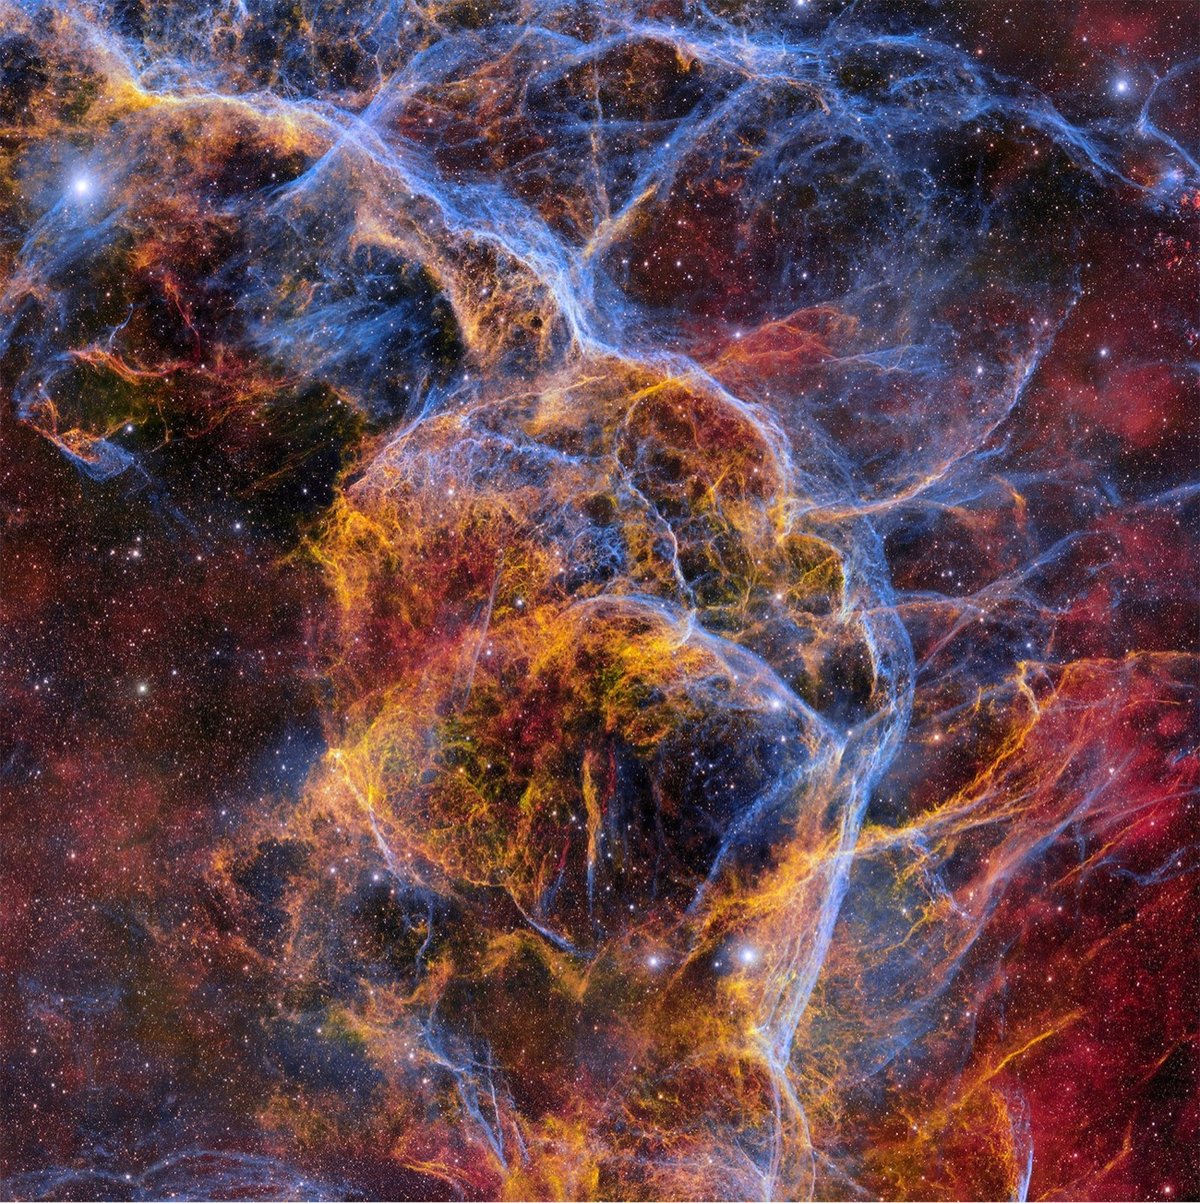 an image of the Vela supernova remnant